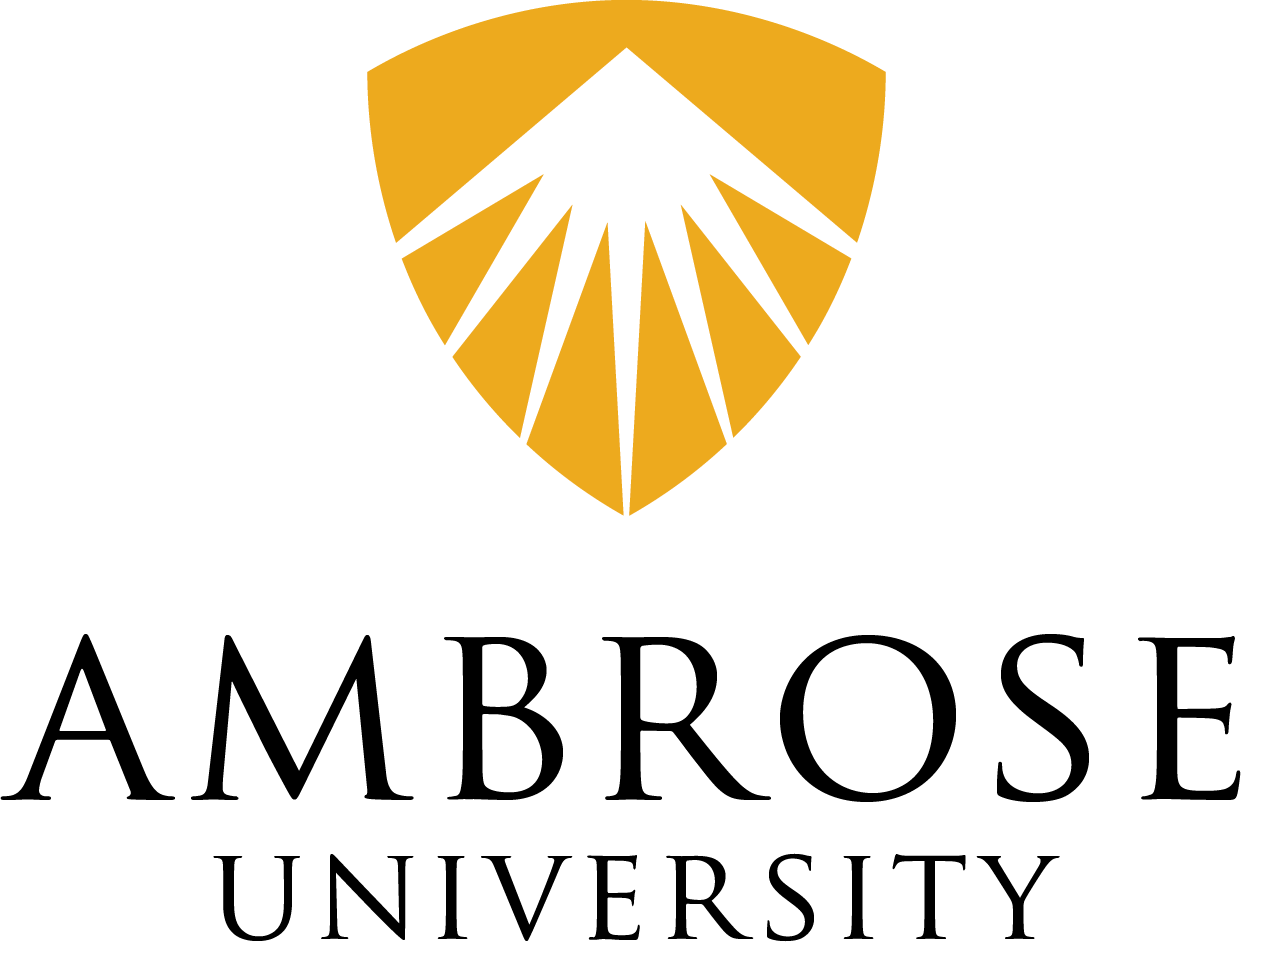 Ambrose university college job board